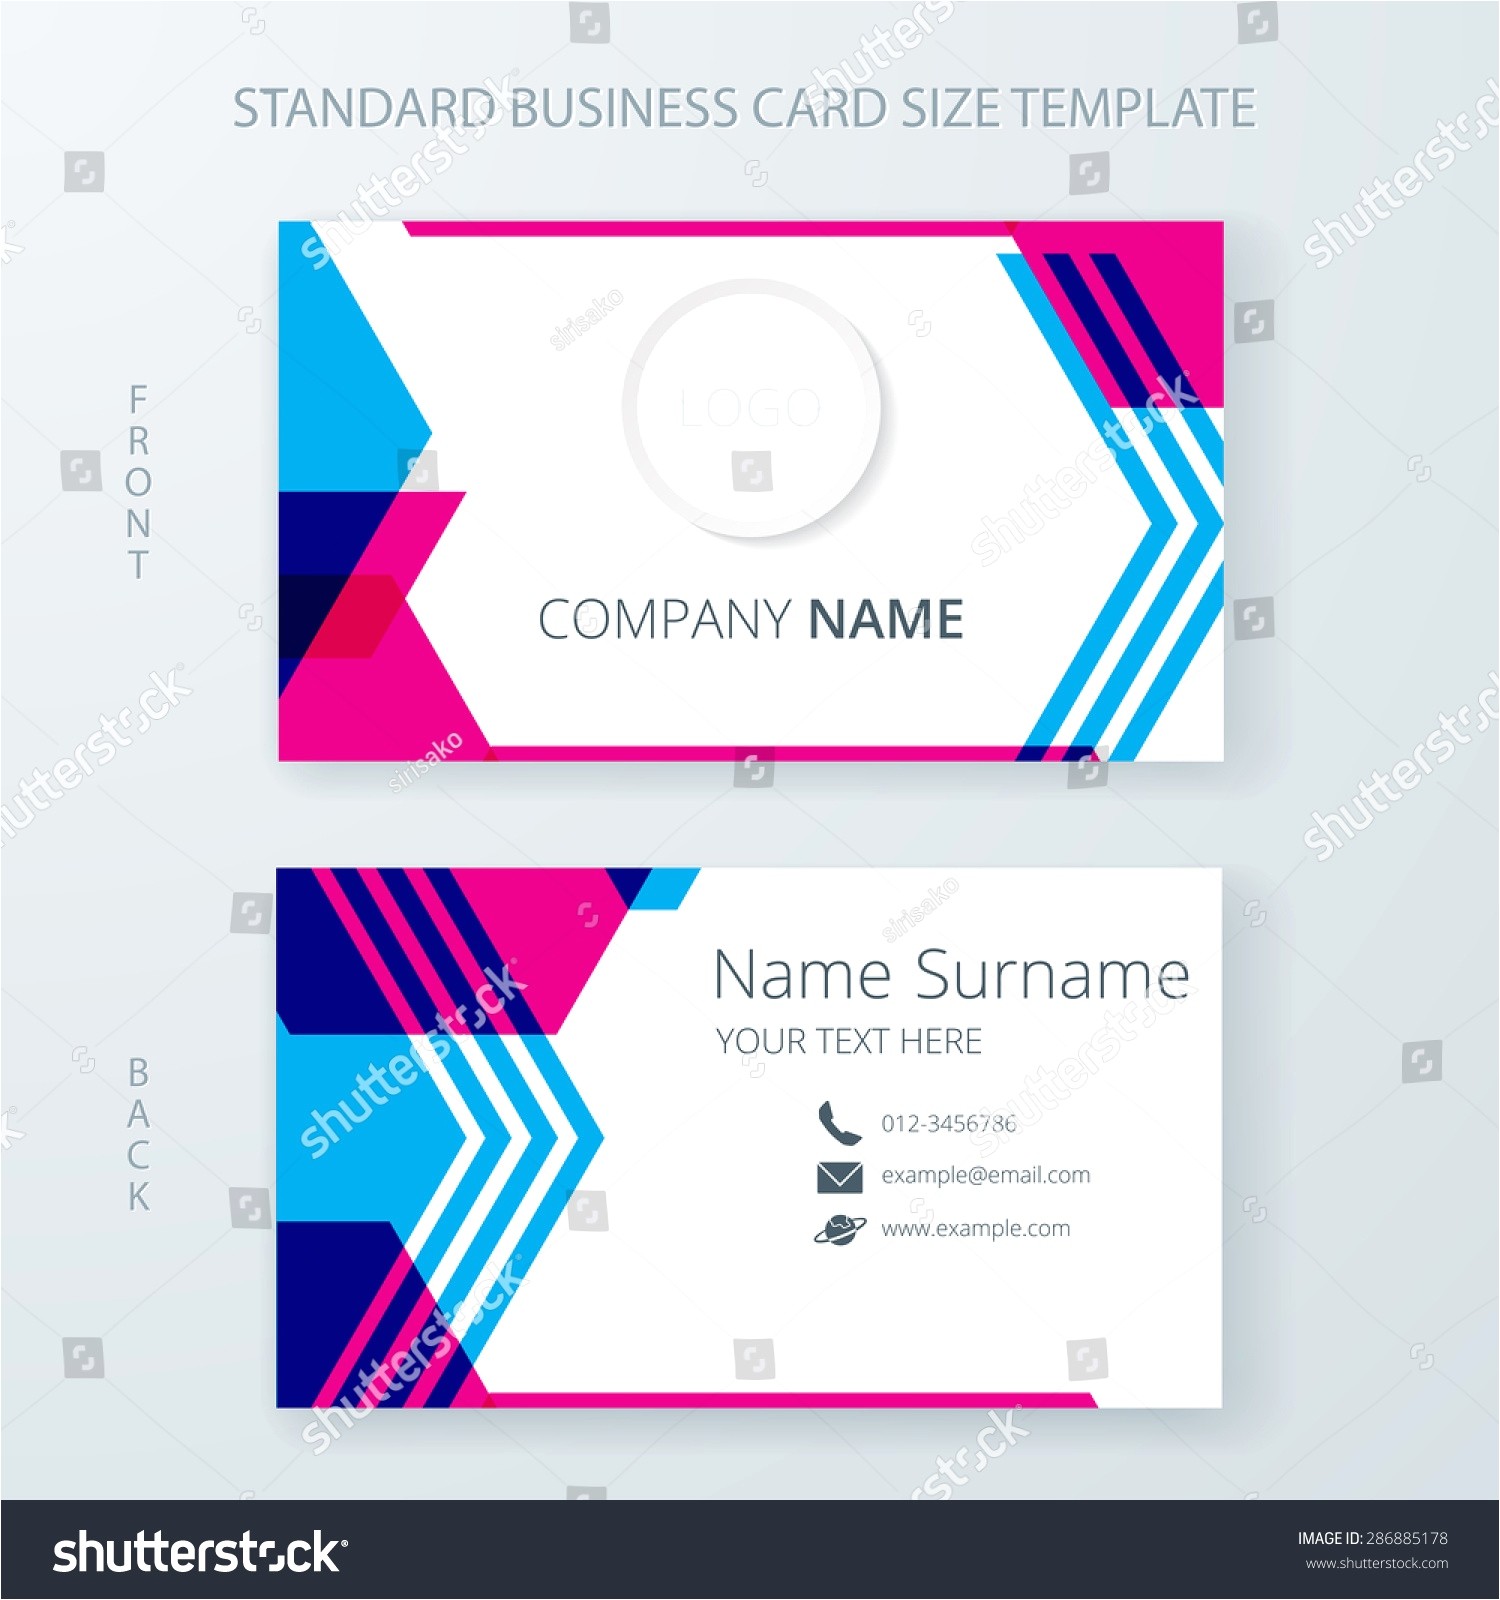 gartner studios business card template